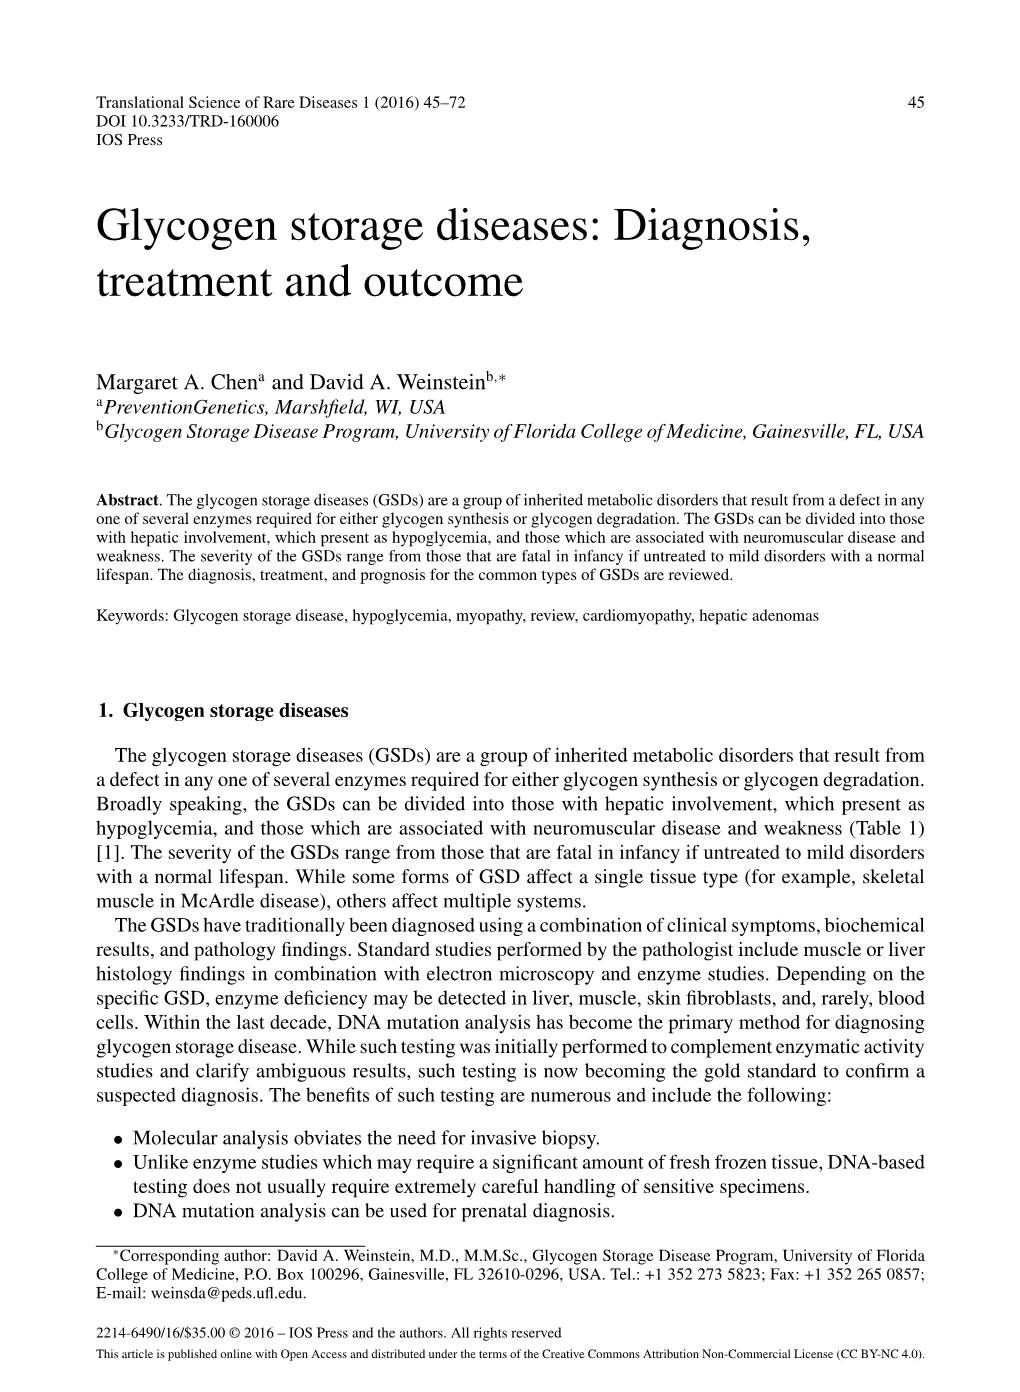 Glycogen Storage Diseases: Diagnosis, Treatment and Outcome